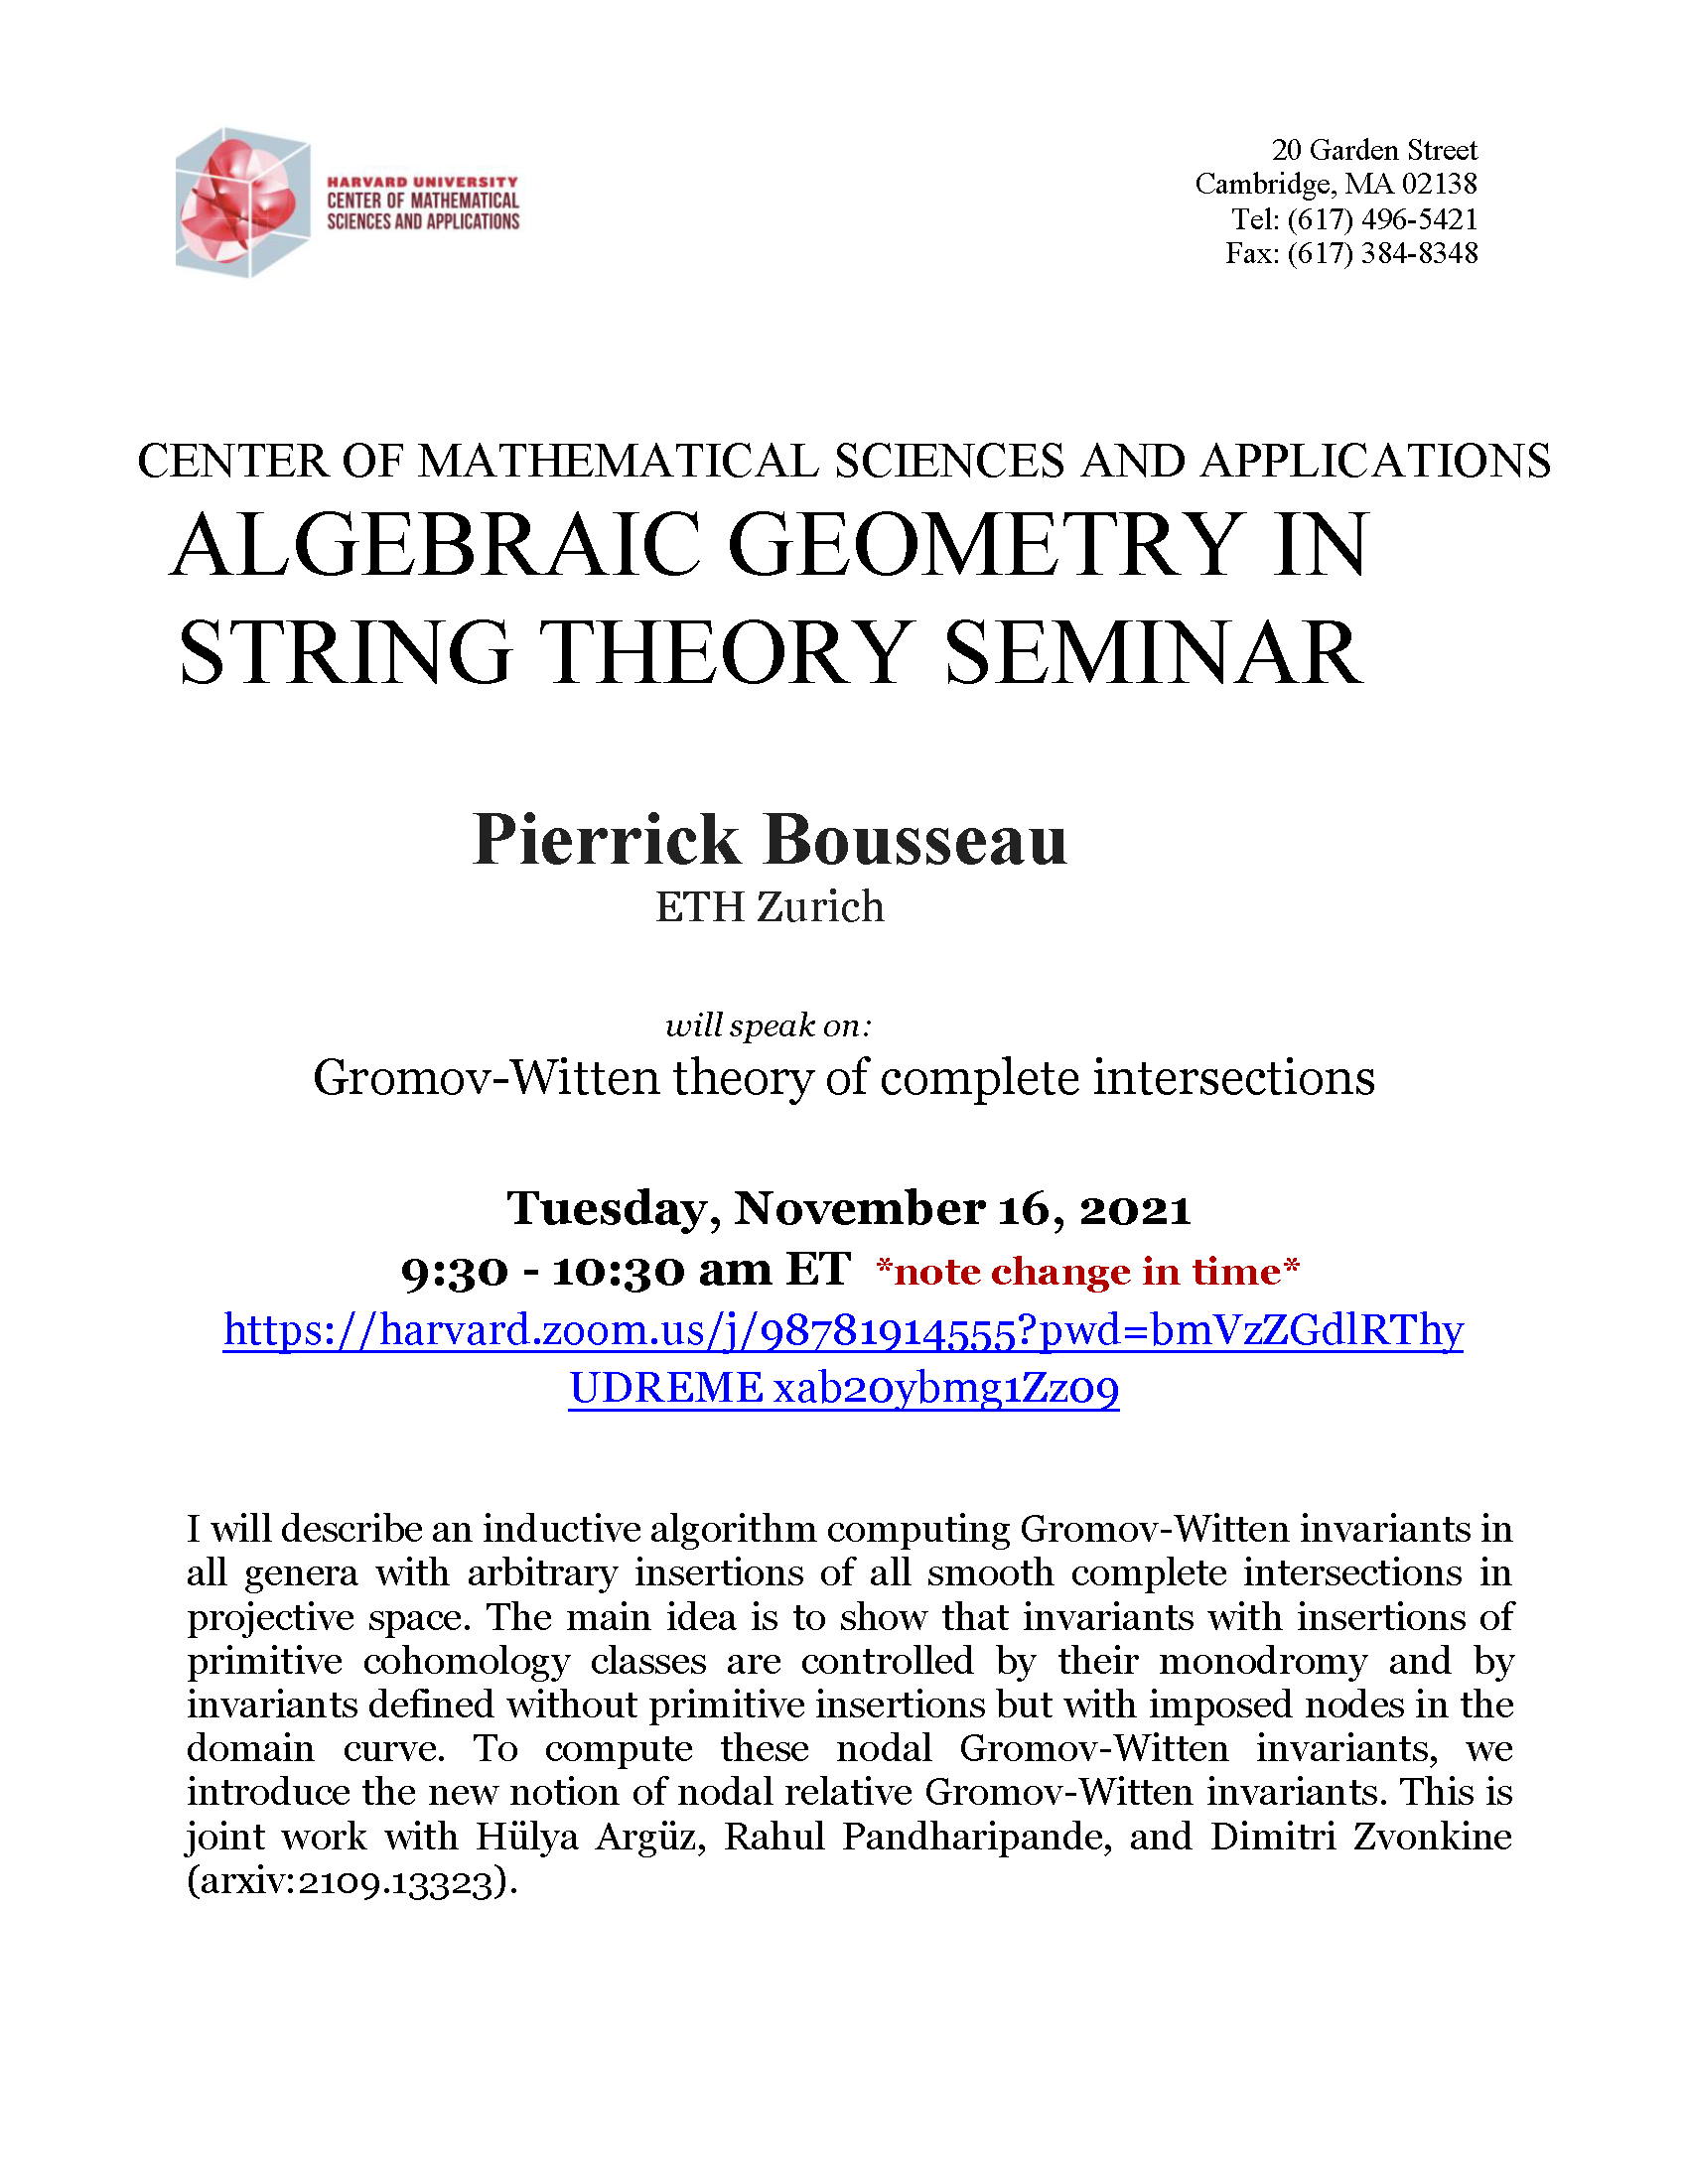 CMSA-Algebraic-Geometry-in-String-Theory-Seminar-11.16.21-1